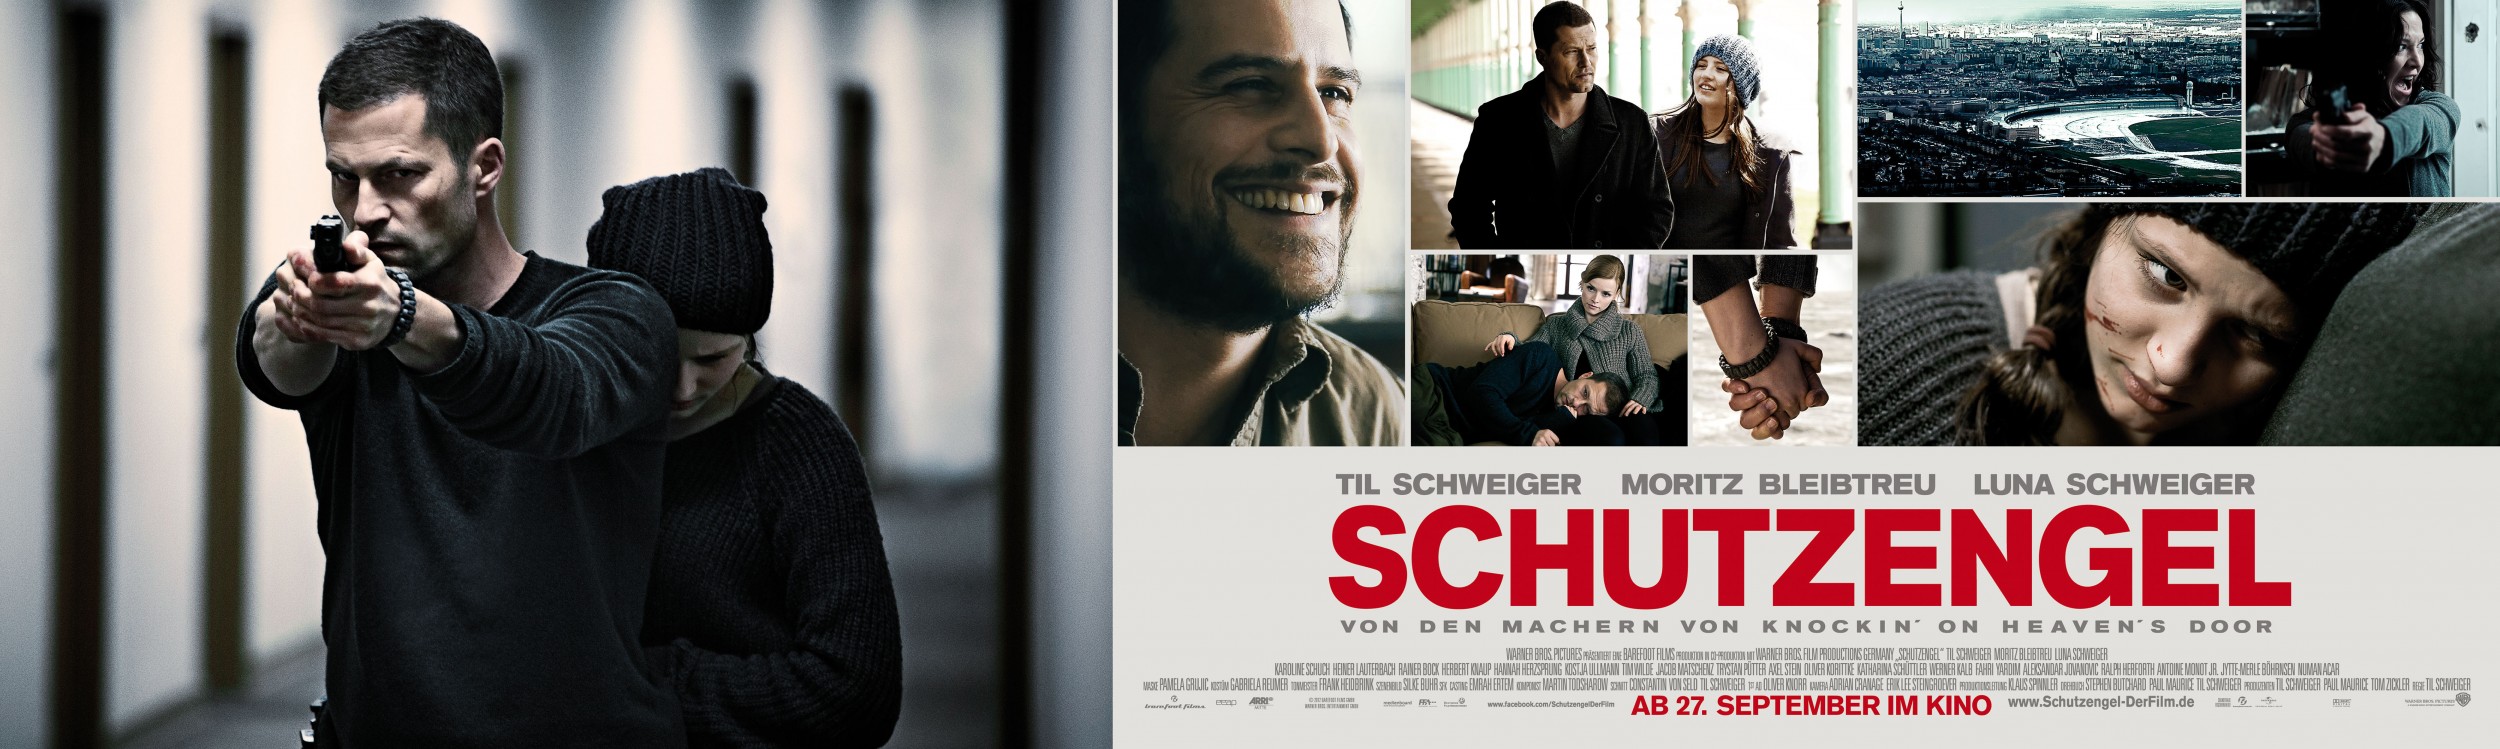 Mega Sized Movie Poster Image for Schutzengel (#2 of 2)